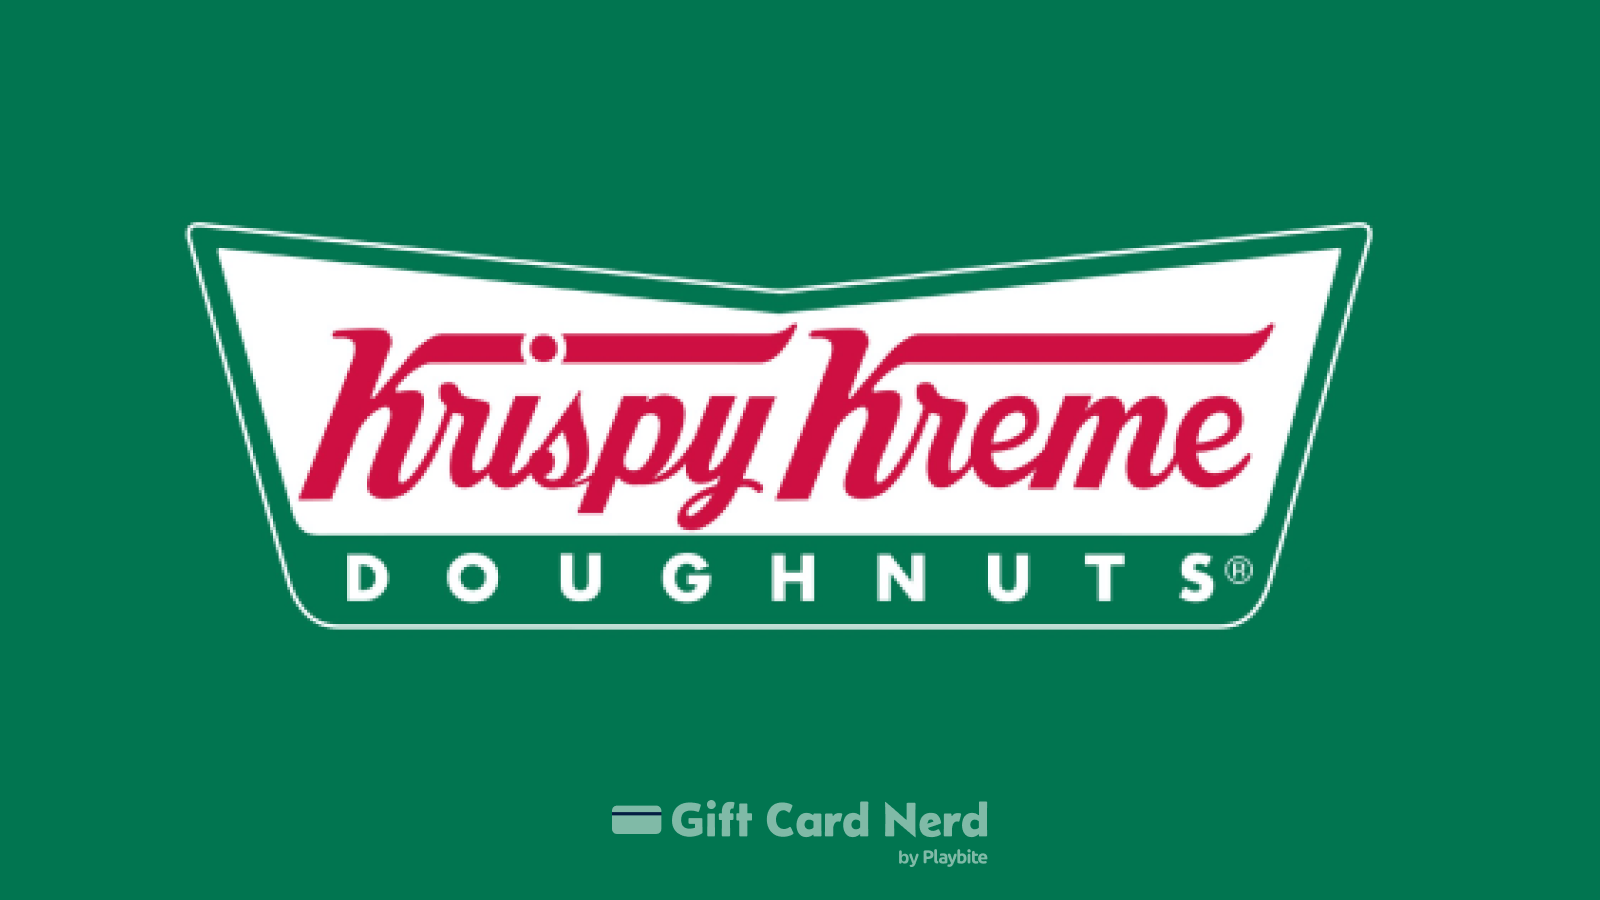 Can I Use a Krispy Kreme Gift Card on Roblox?